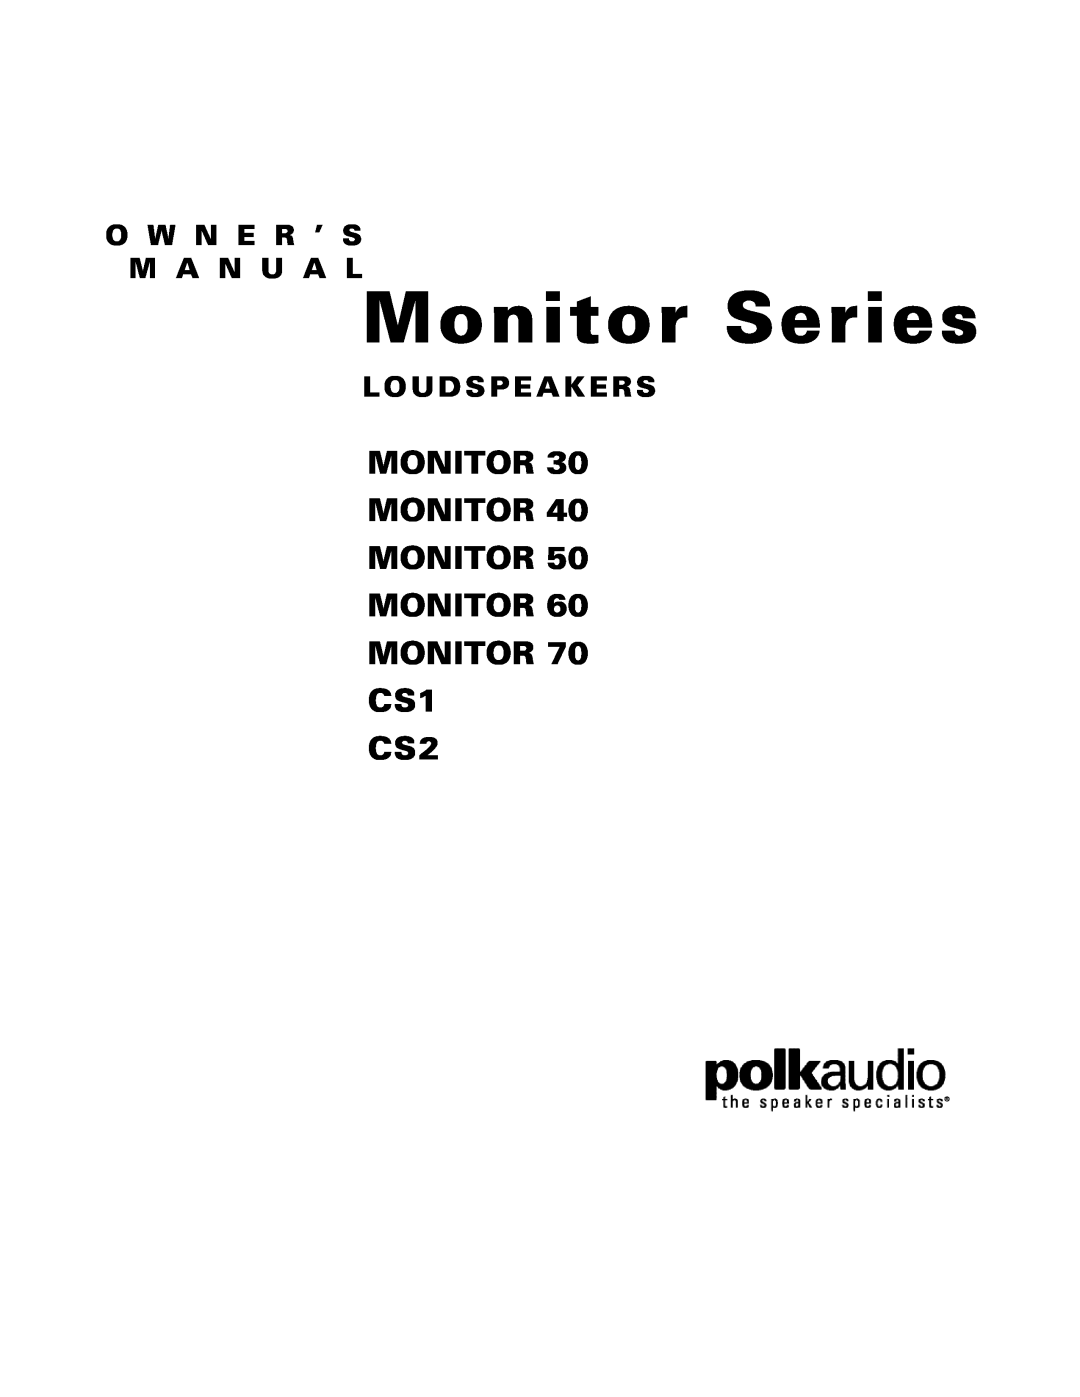 Polk Audio AM4095-A owner manual SeriesII, Monitor30, Monitor40, Monitor50, Monitor60, Monitor70, Loudspeakers 